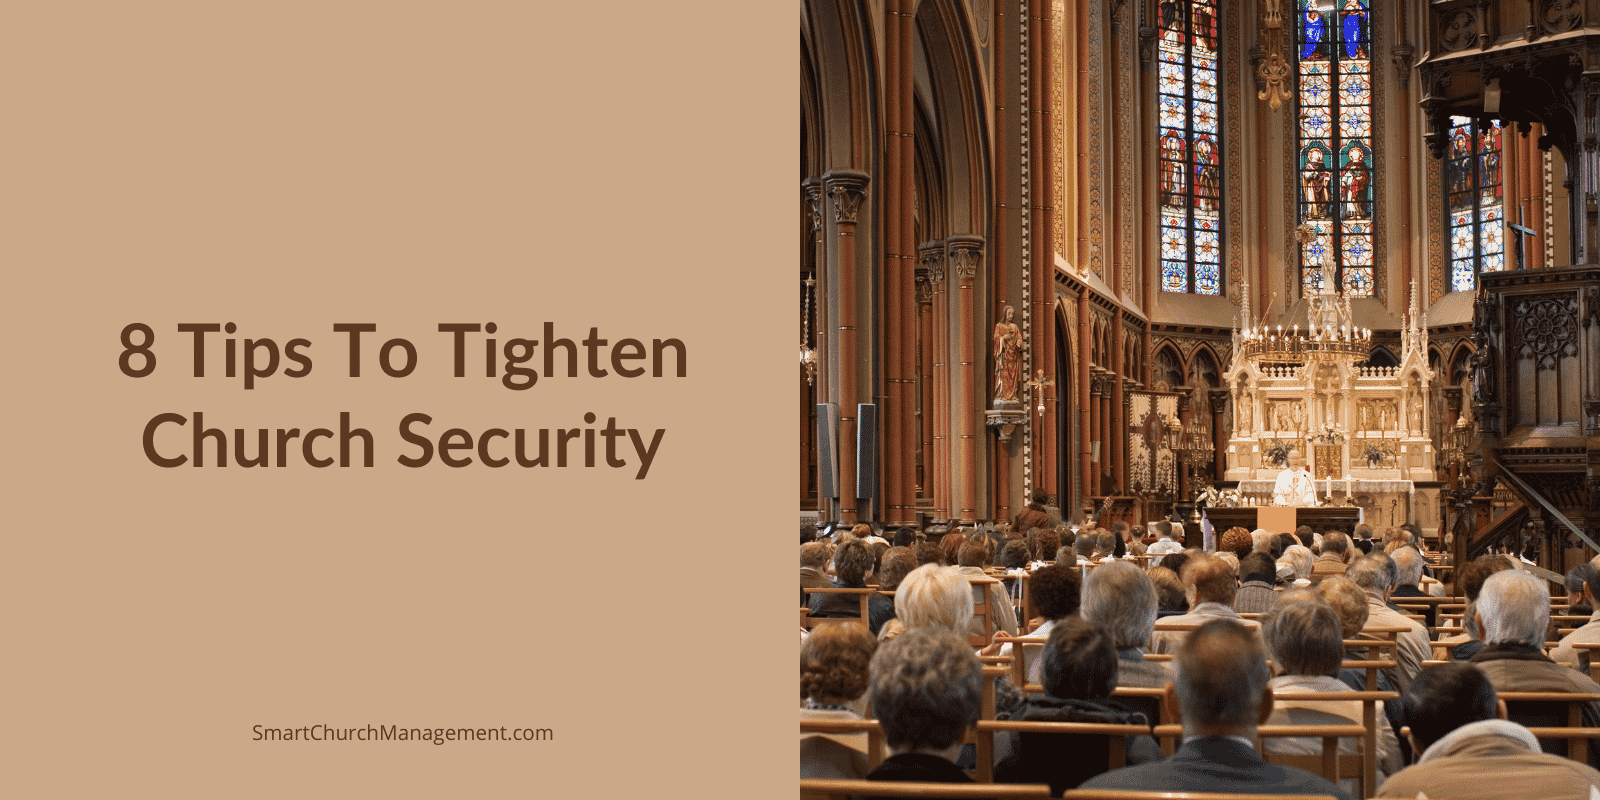 Tips to tighten church security